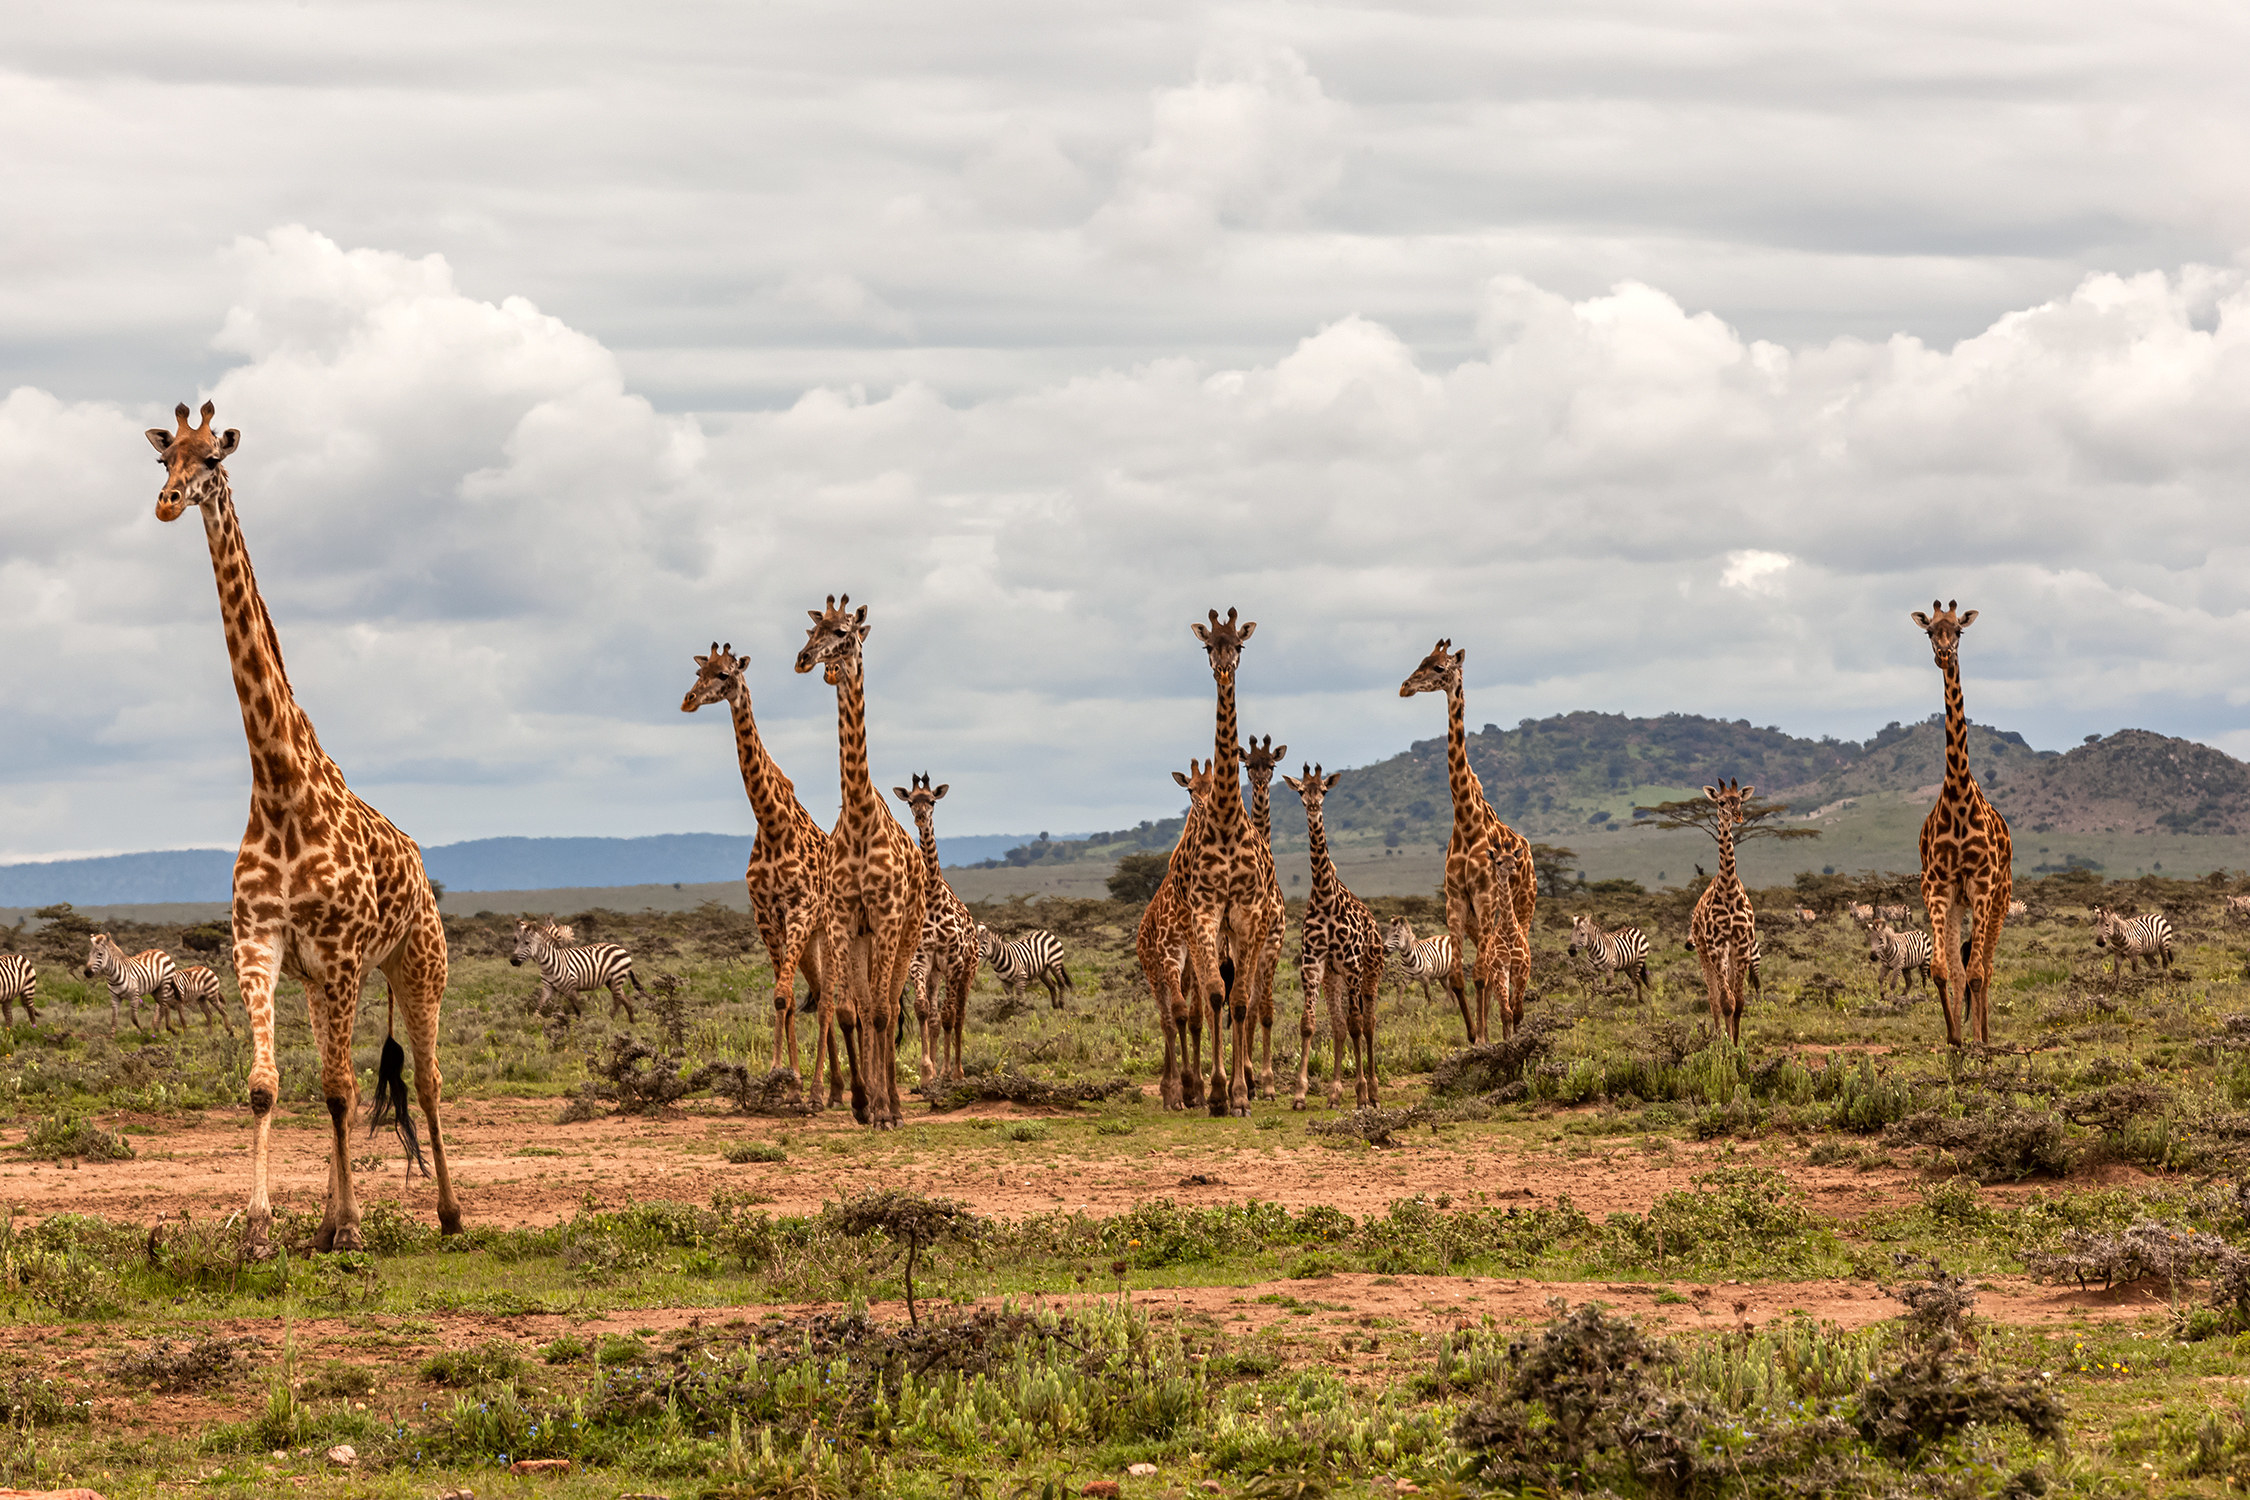 Masai Giraffe herd at wild with Plains Zebra Herd.